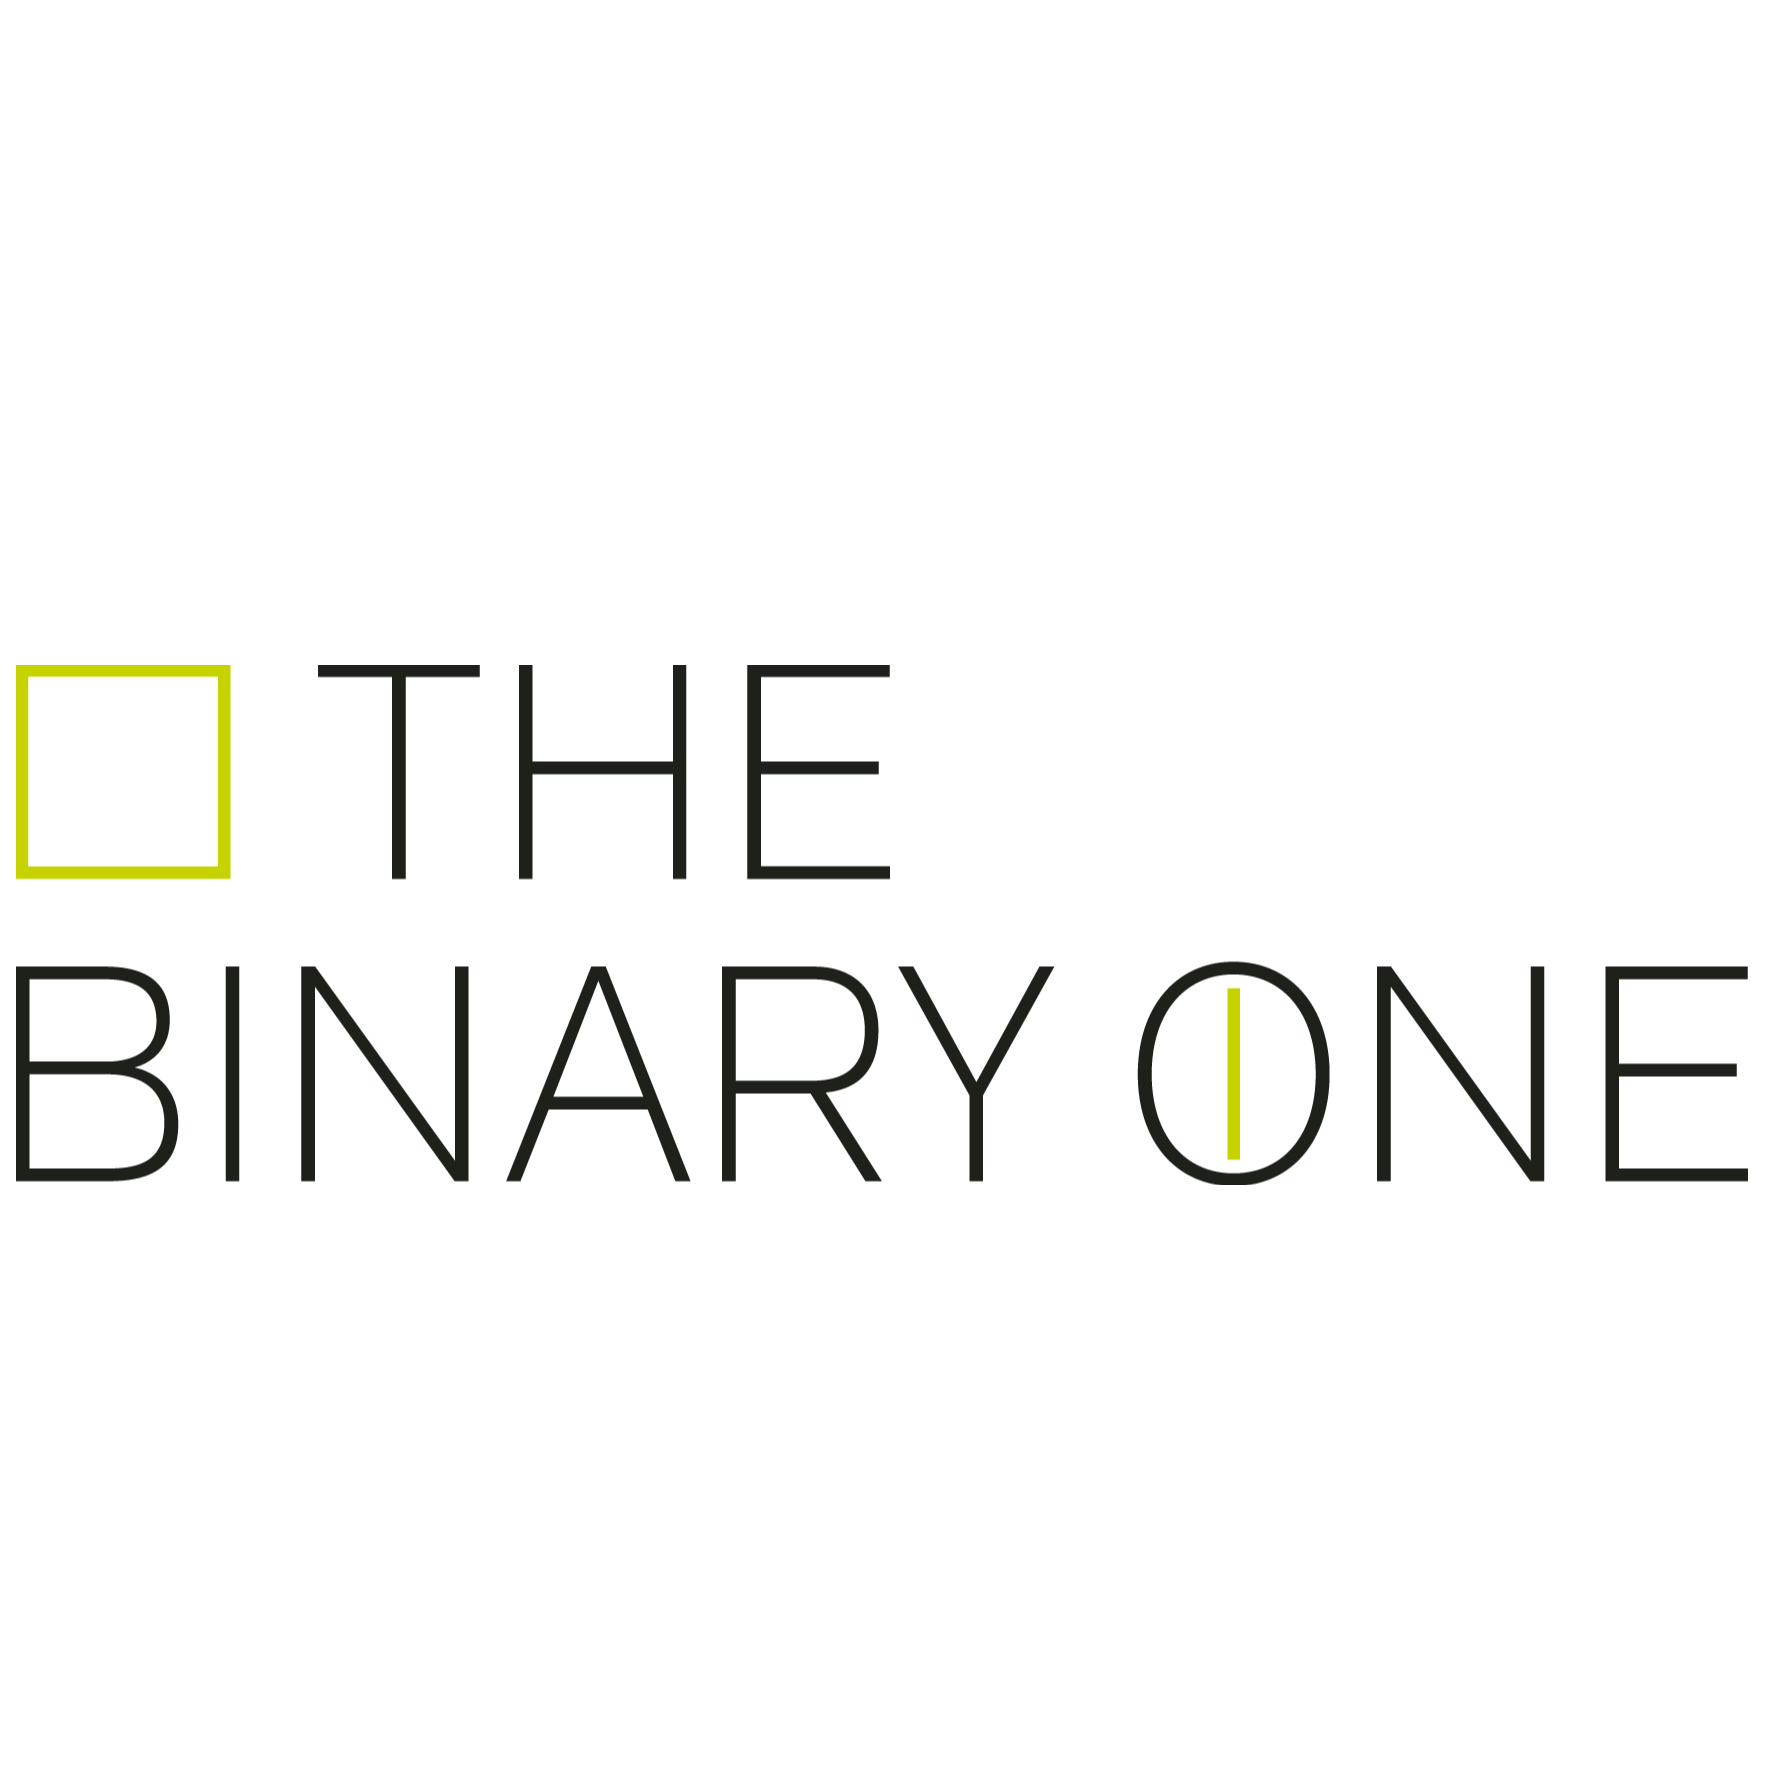 The Binary One